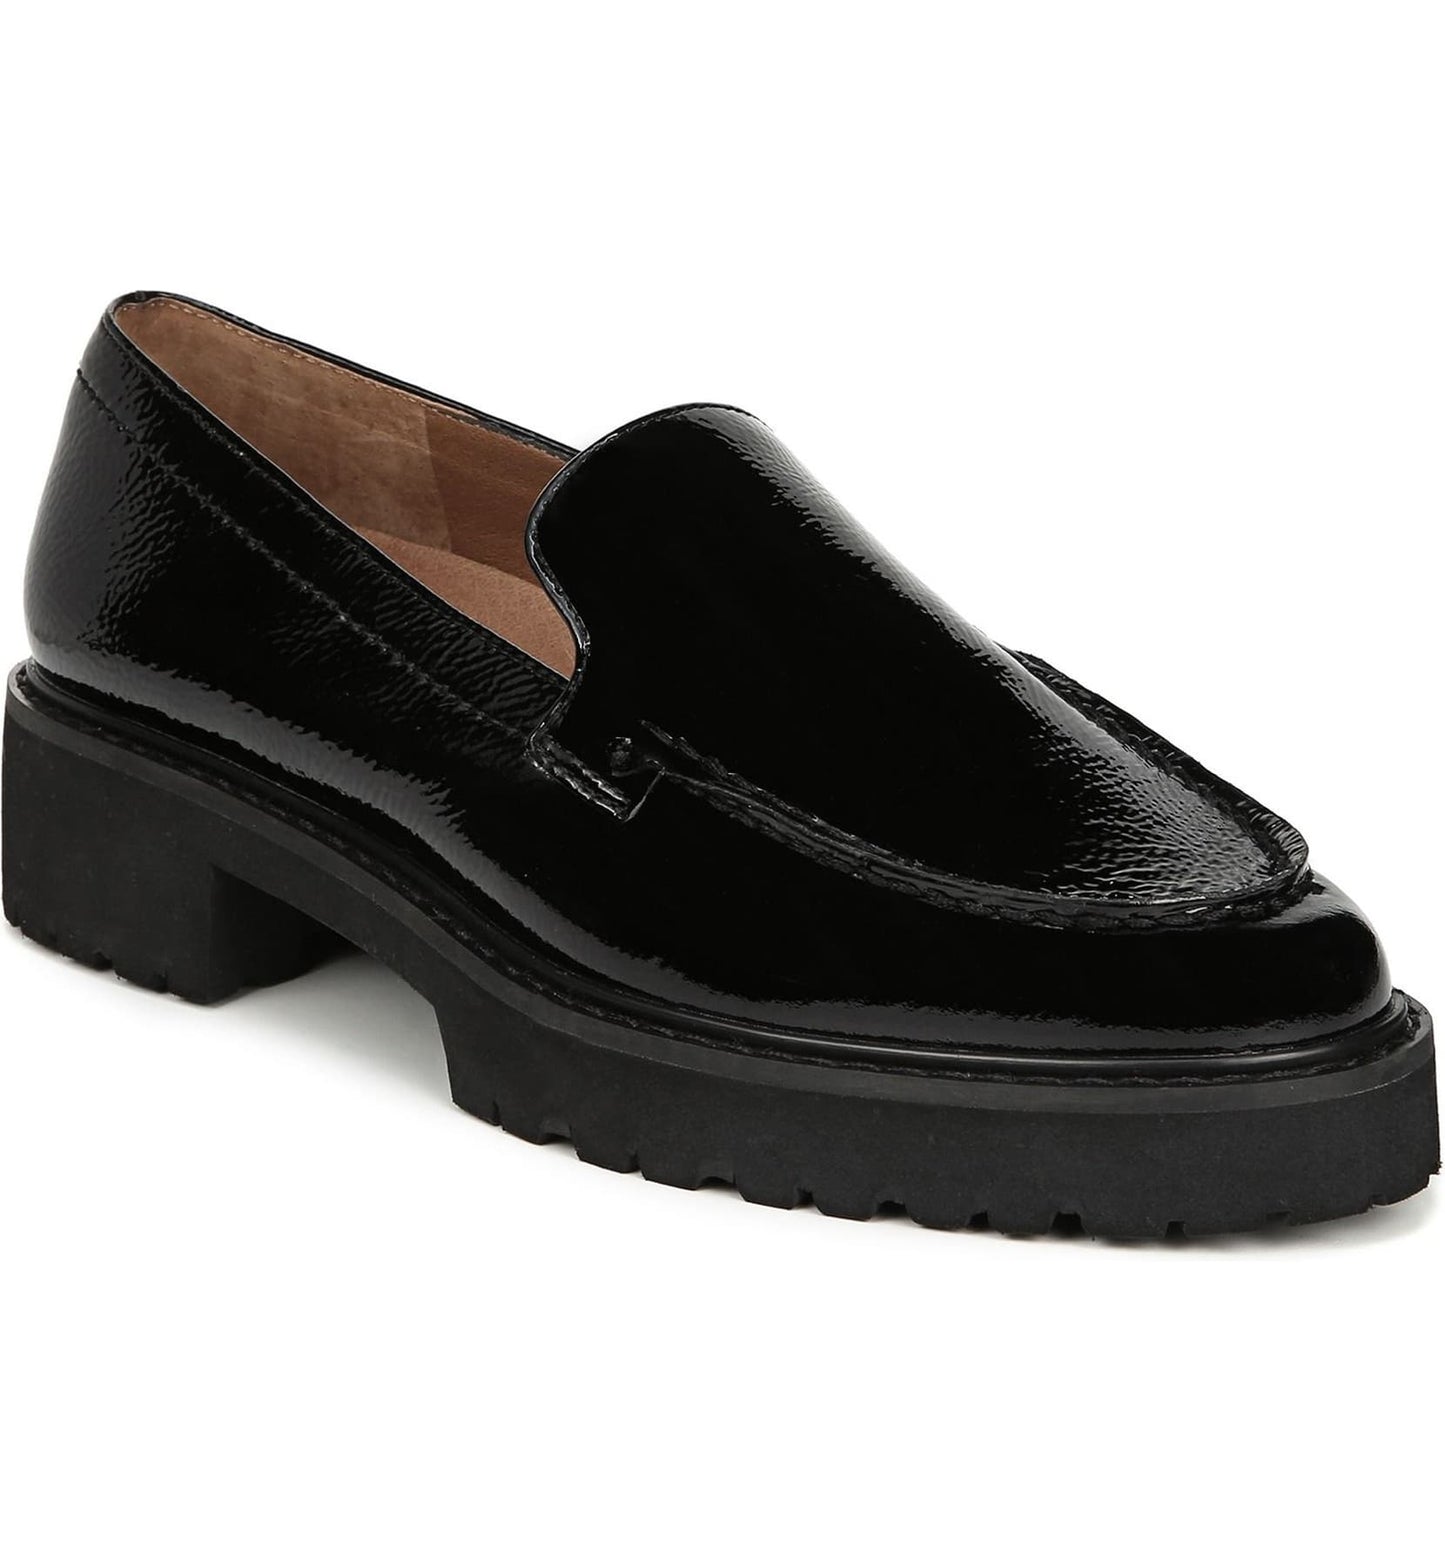 Delana Black Patent Leather Franco Sarto Loafers